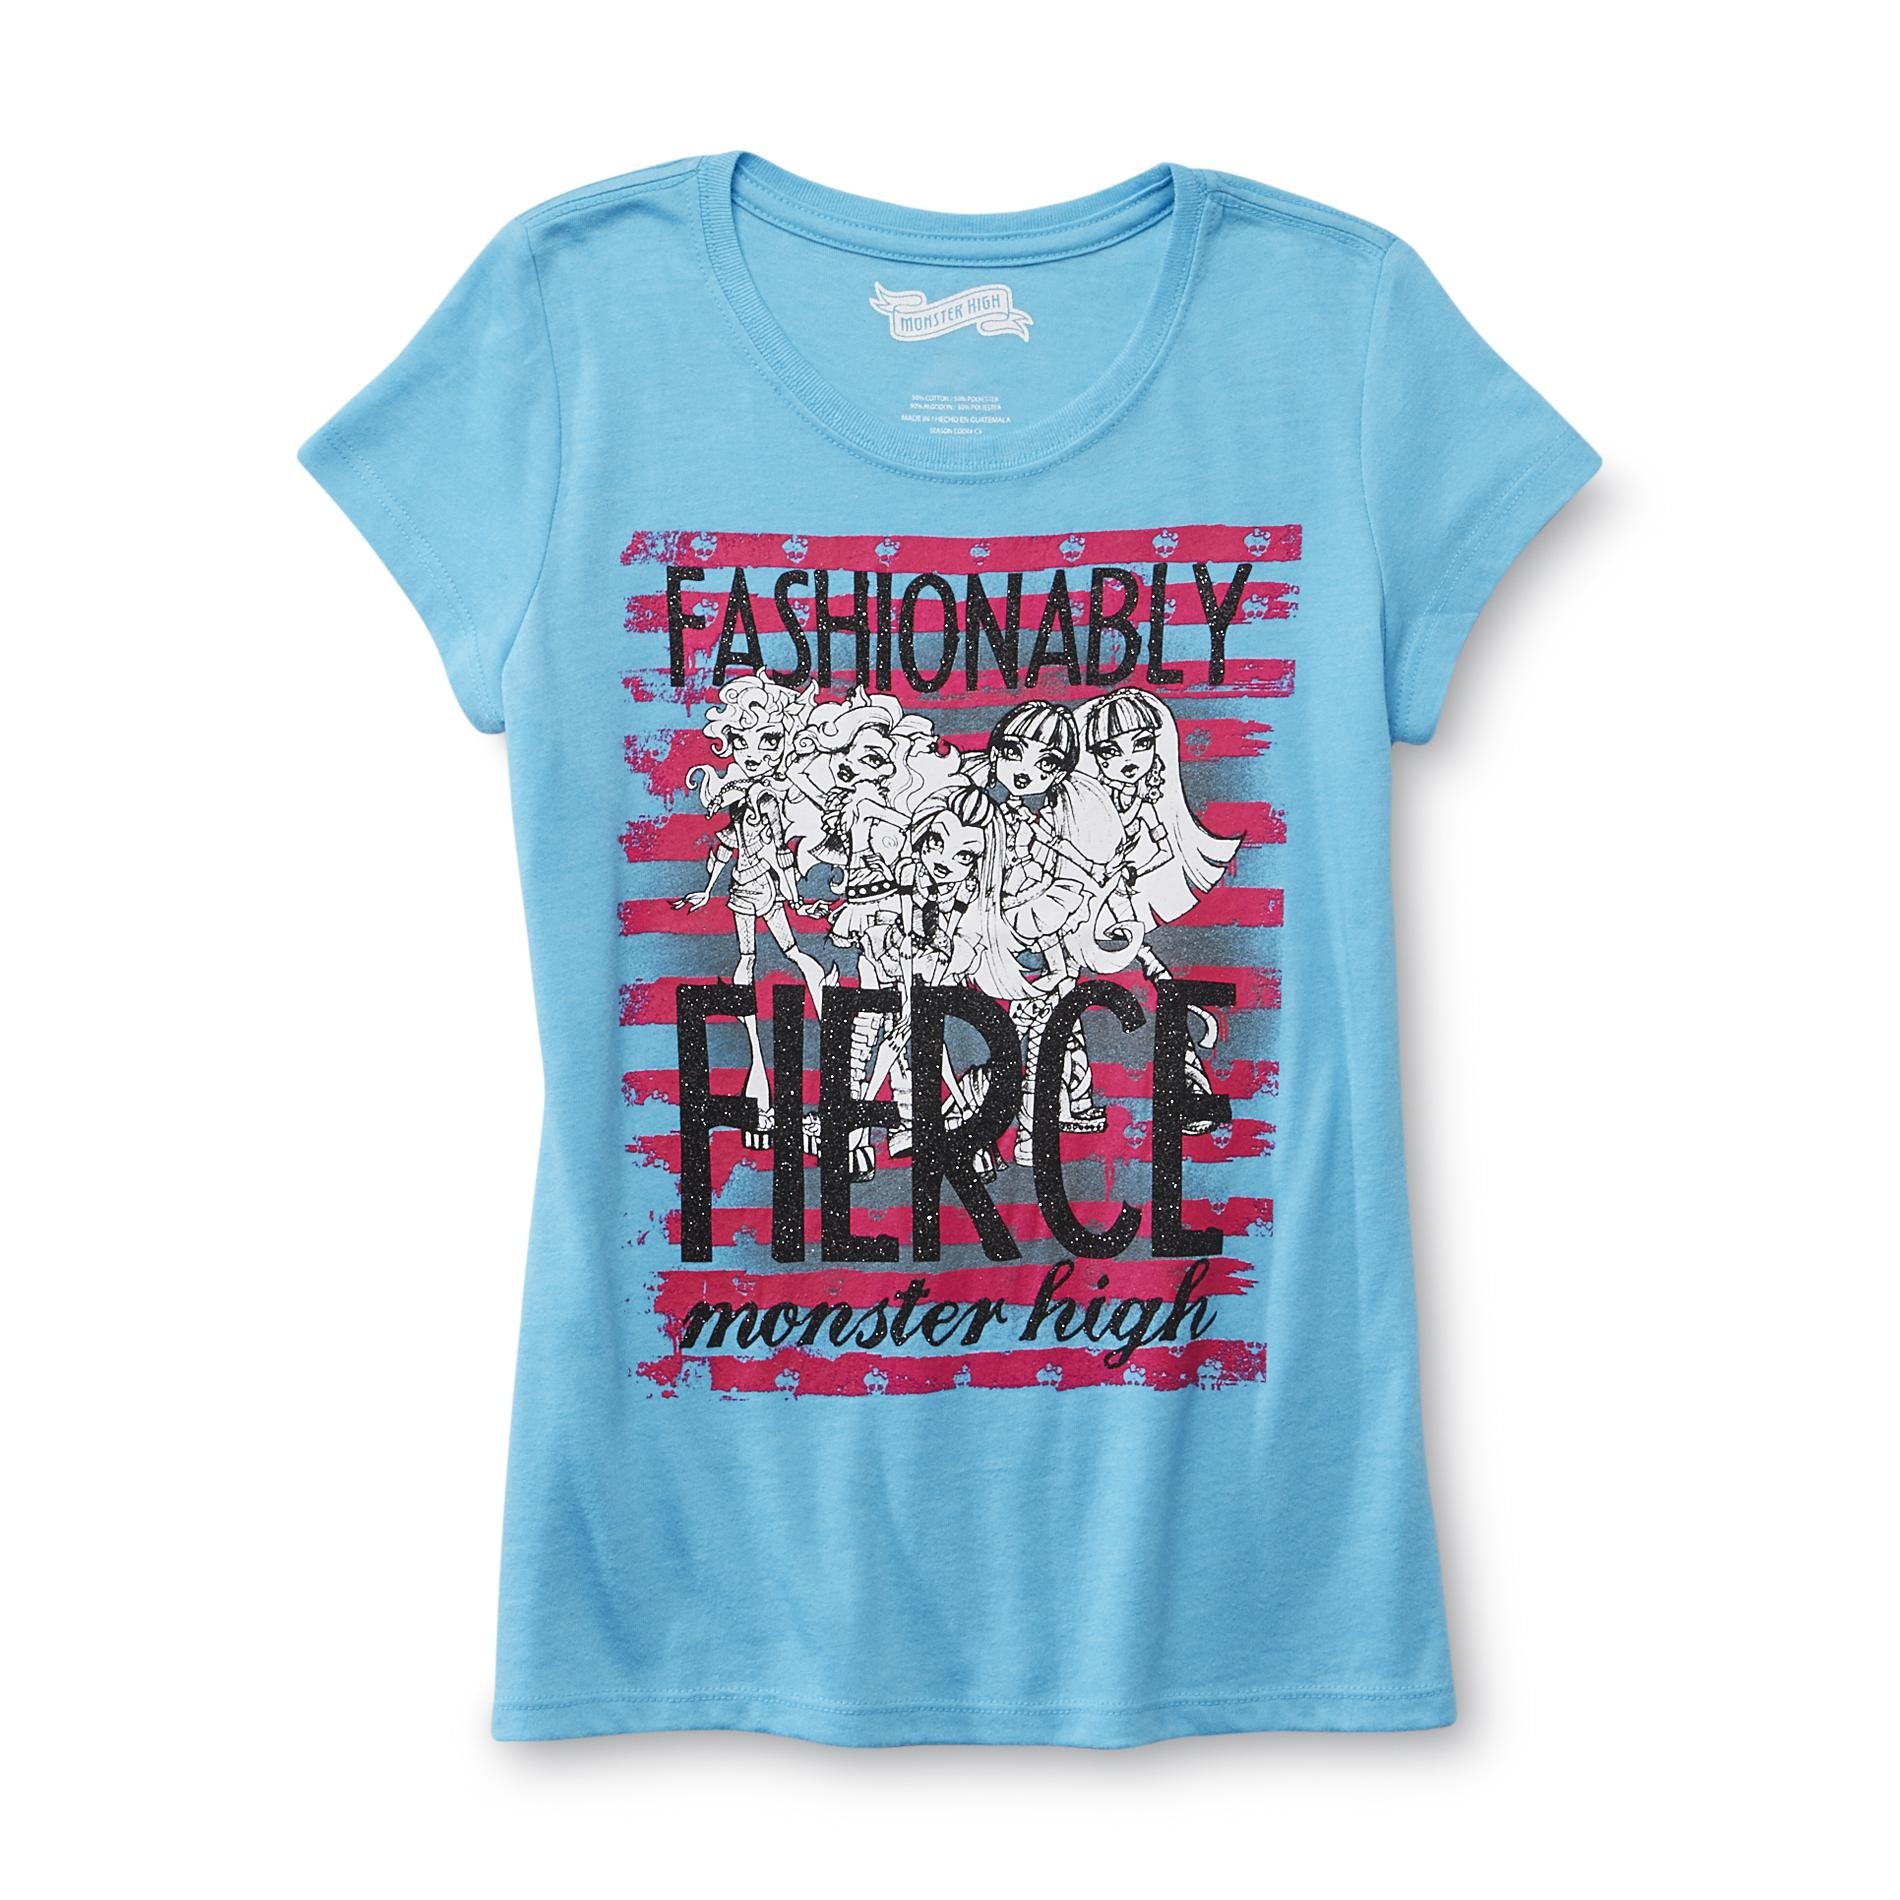 Monster High Girl's Graphic T-Shirt